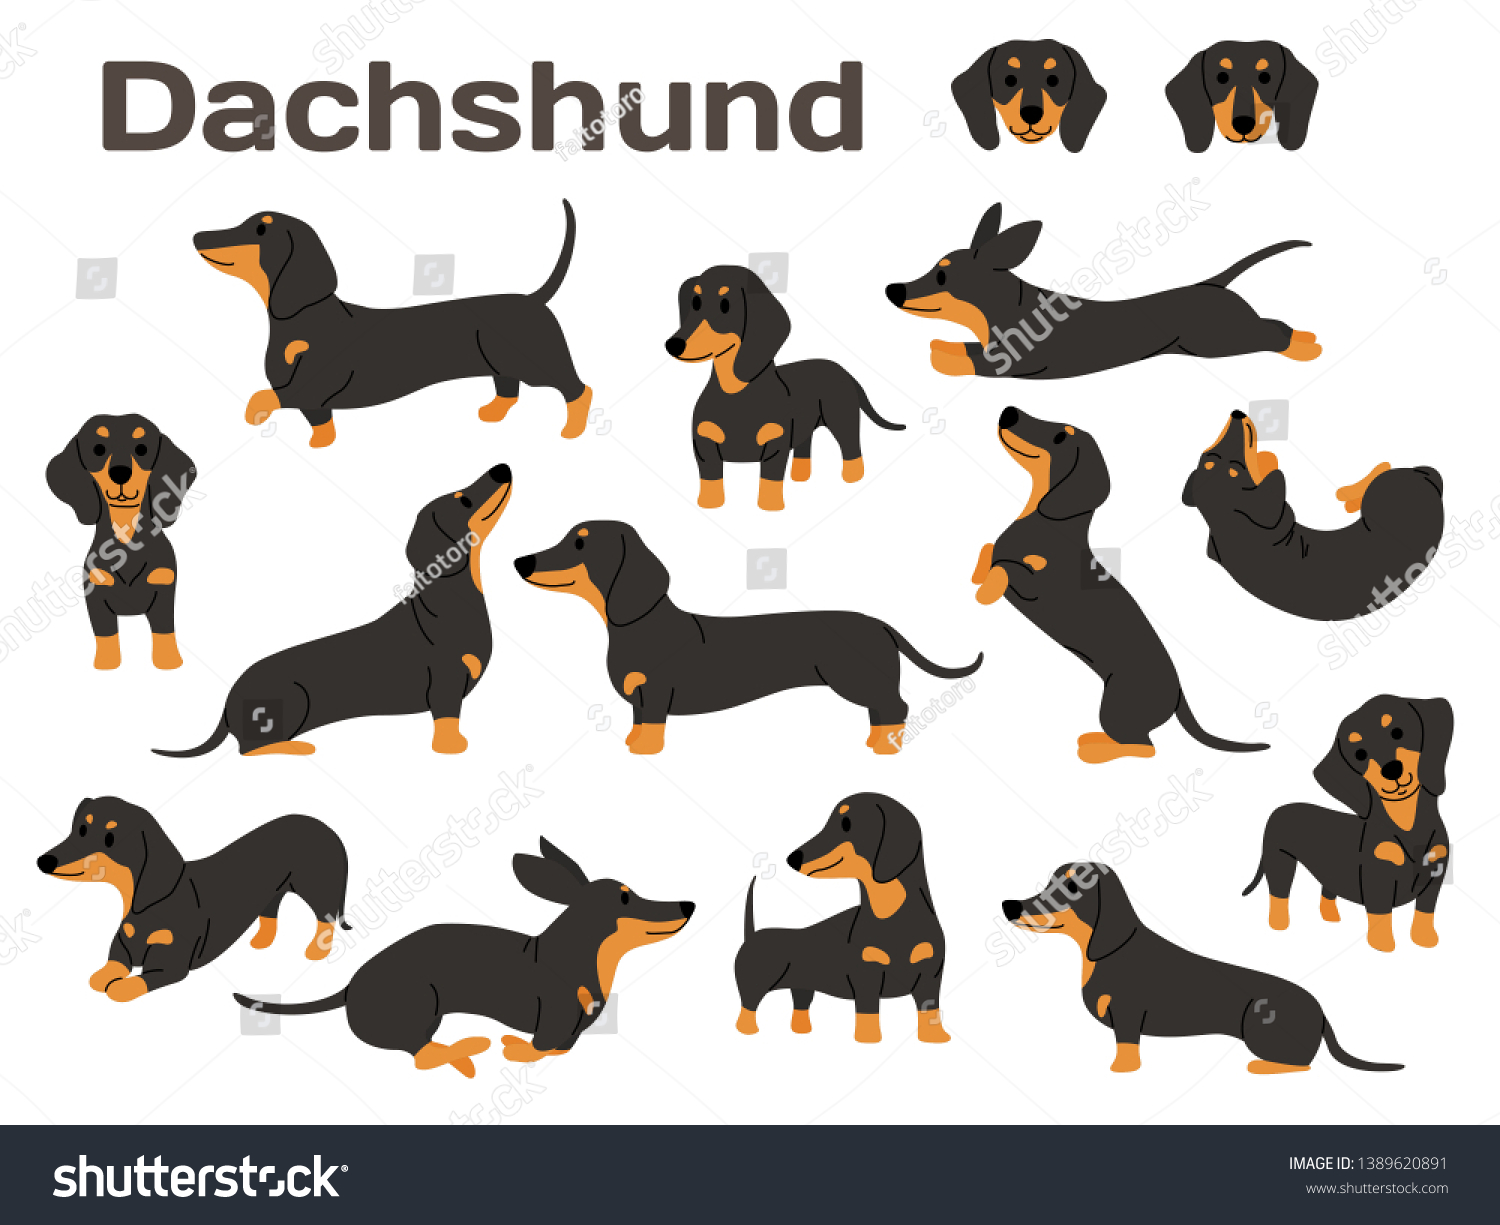 SVG of dachshund illustration,dog poses,dog breed,dachshund in action svg